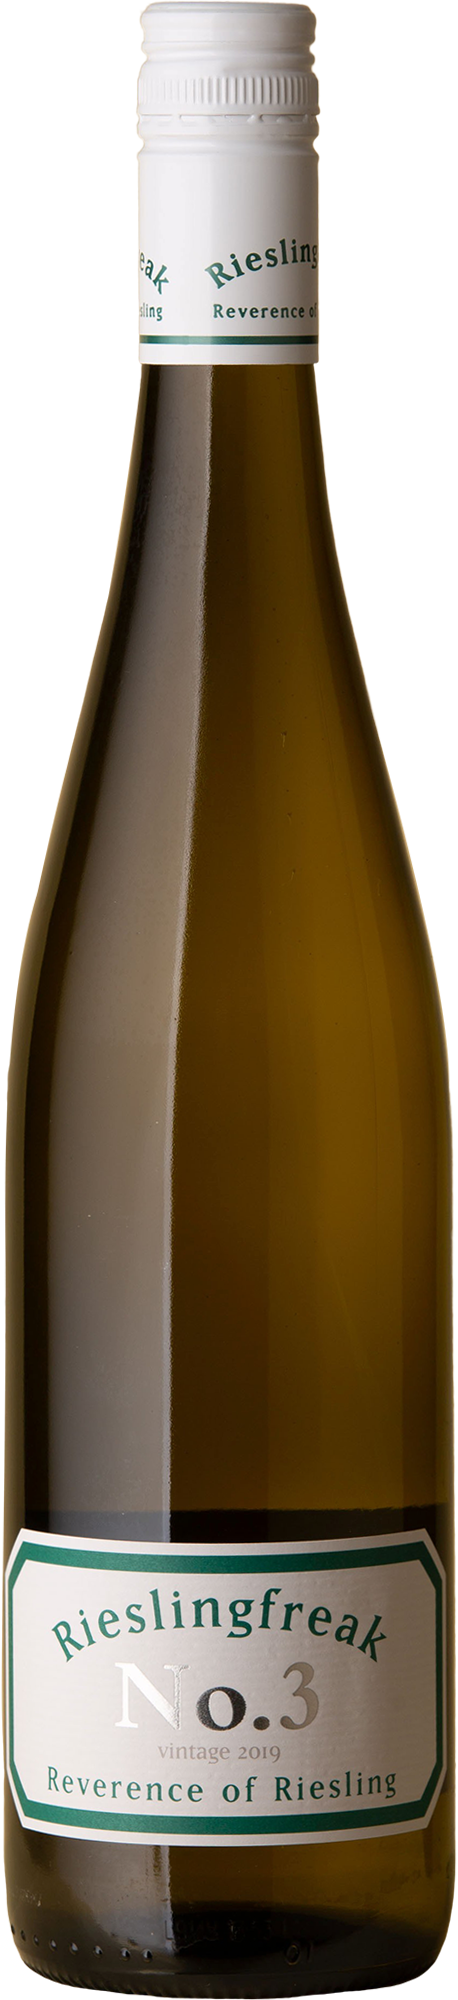 RieslingFreak - No.3 Riesling 2019 White Wine